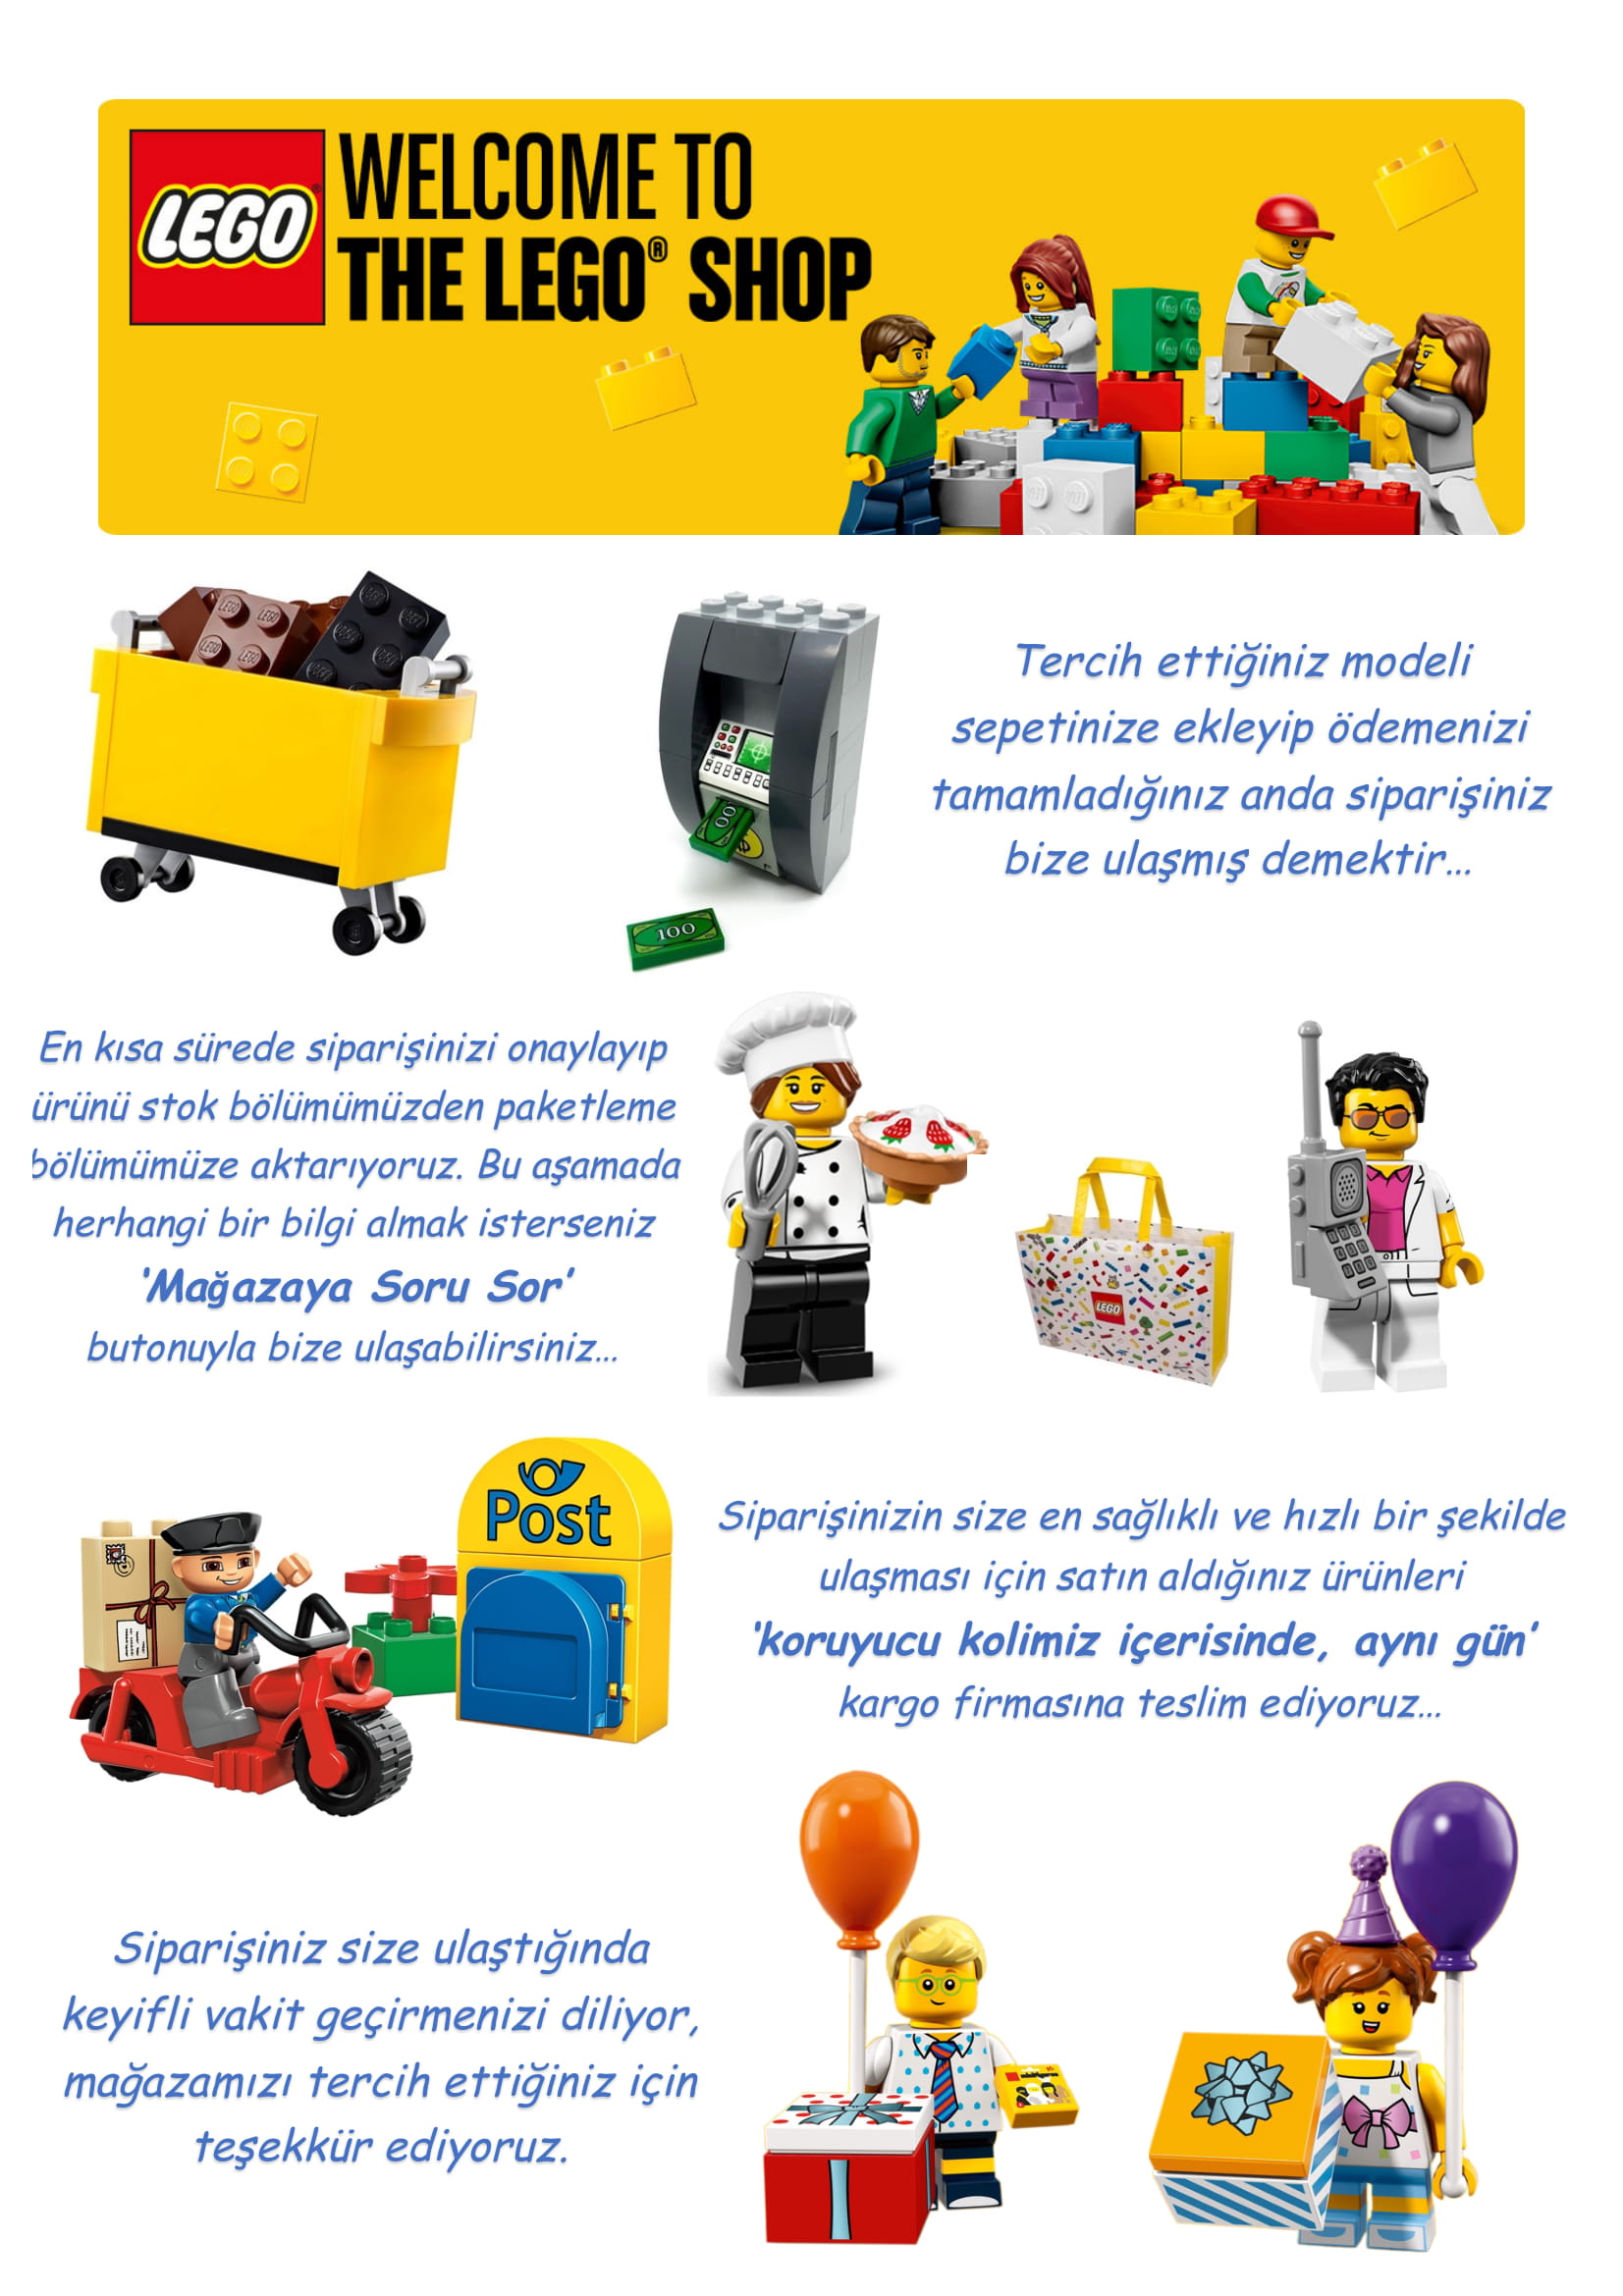 LEGO Education: MoreToMath Kit 1-2 Snake (2000211) for sale online